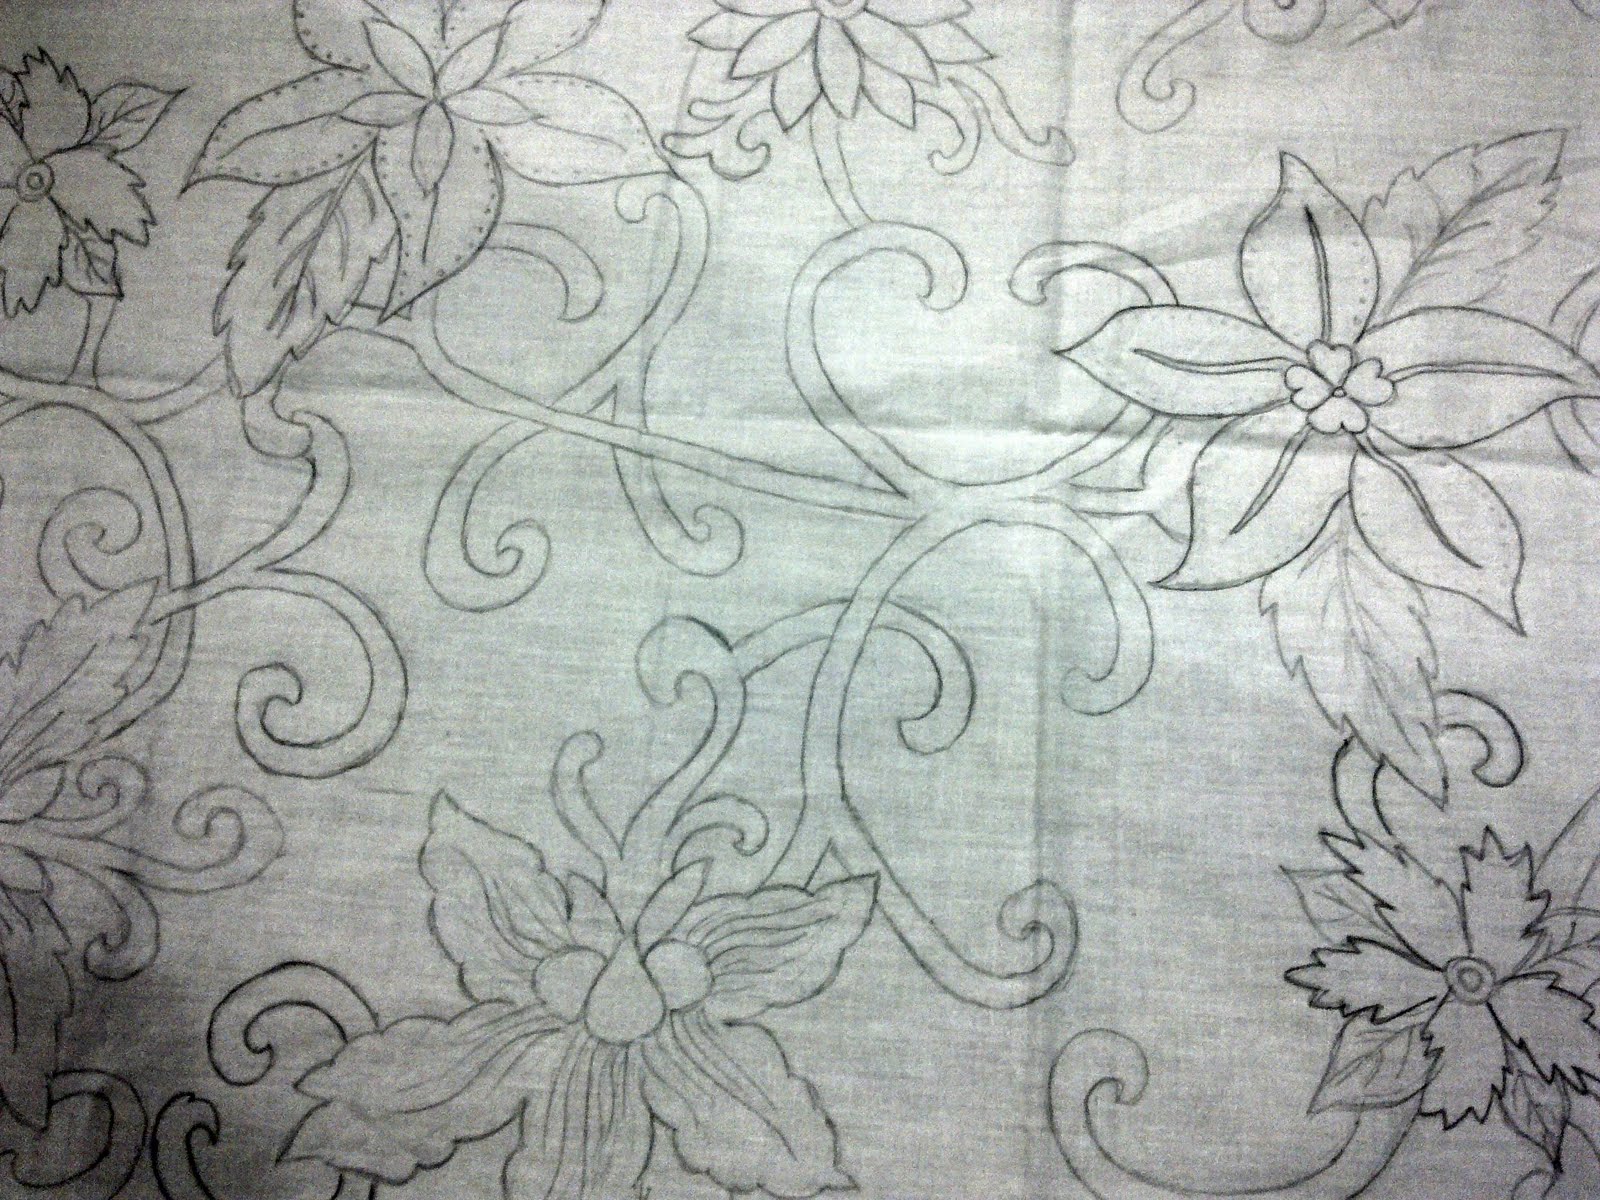 Stupidisious Blog Sketch of Batik  Masterpiece 